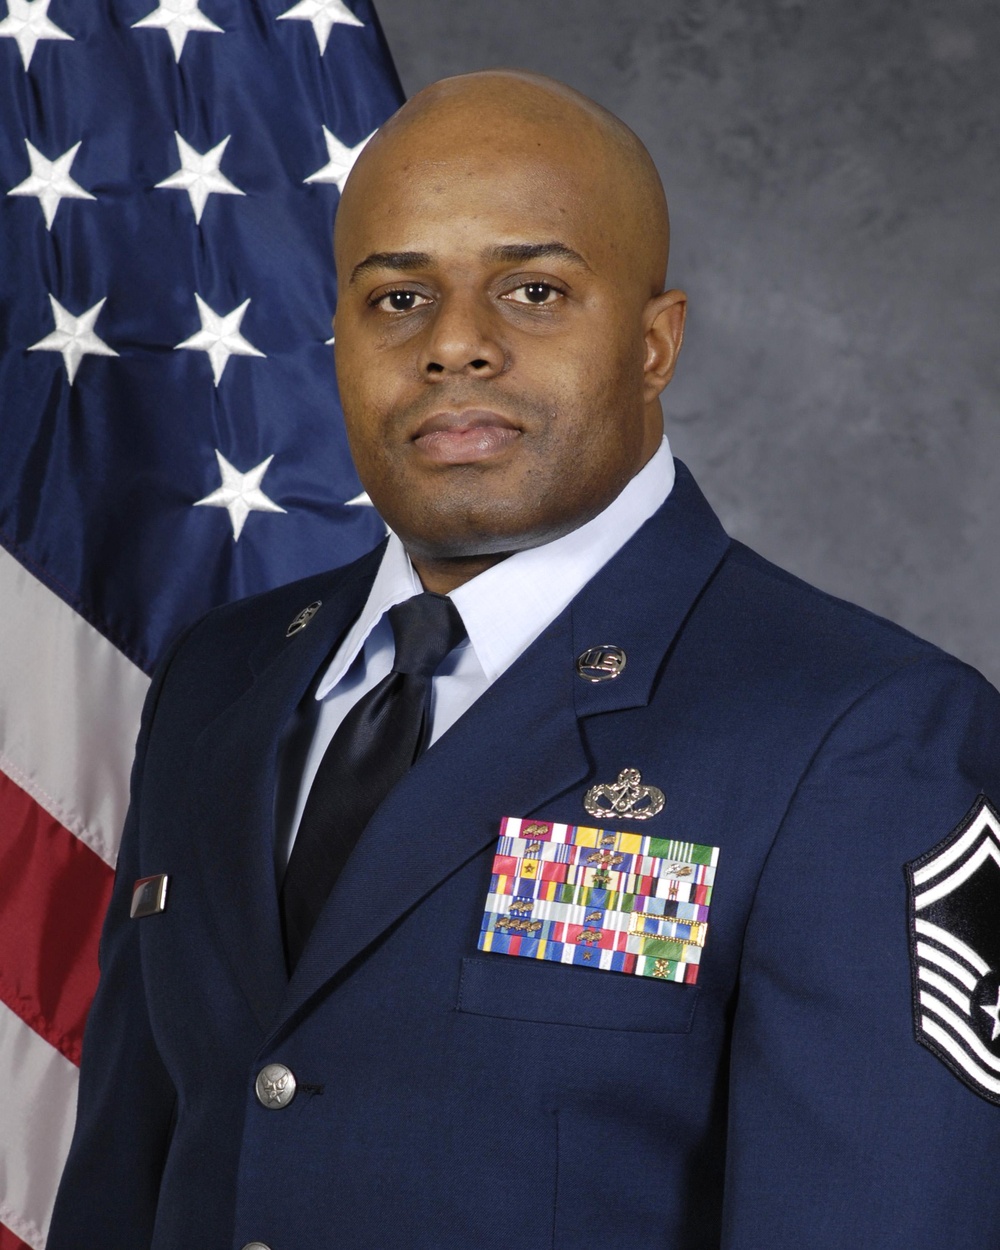 Scott AFB senior master sergeant, Shreveport native, earns 2010 Air Mobility Command Senior NCO of the Year